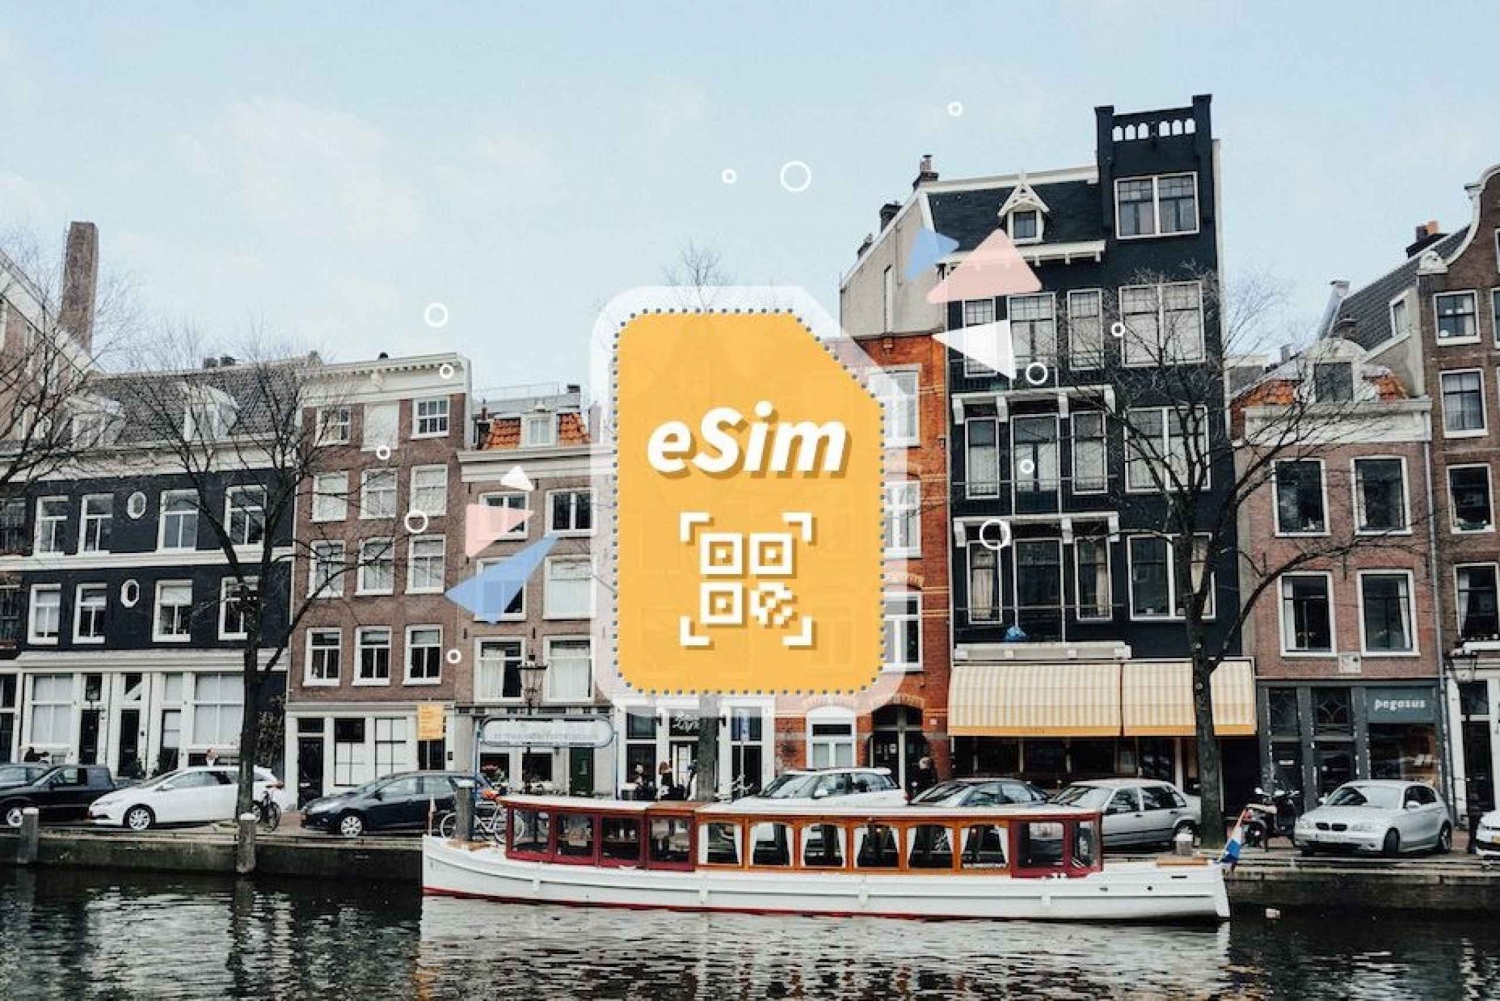 Niederlande/Europa: eSim Mobile Datenplan